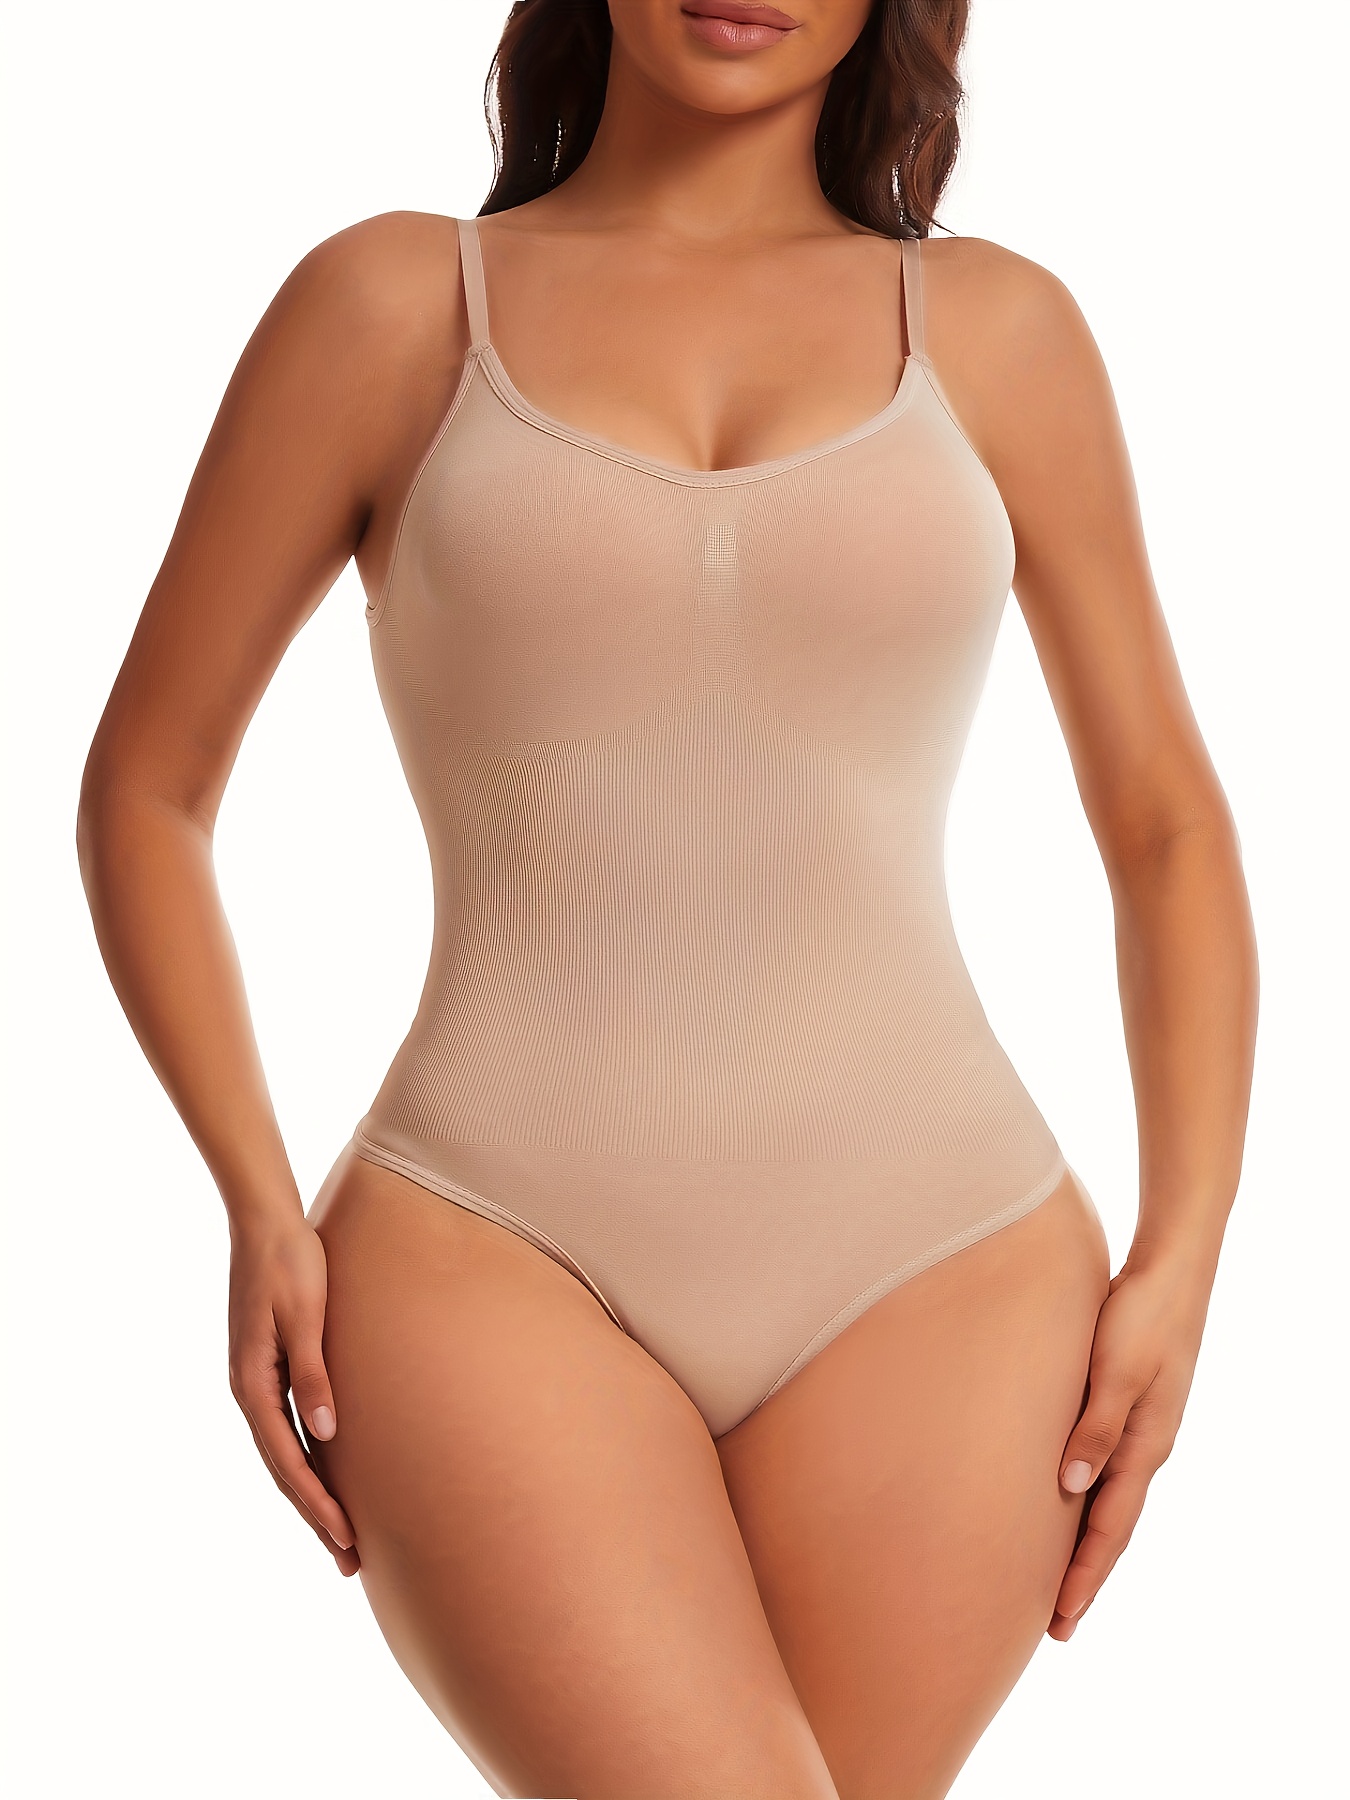  Tummy Control Underwear Backless Body Shaper Plus Size